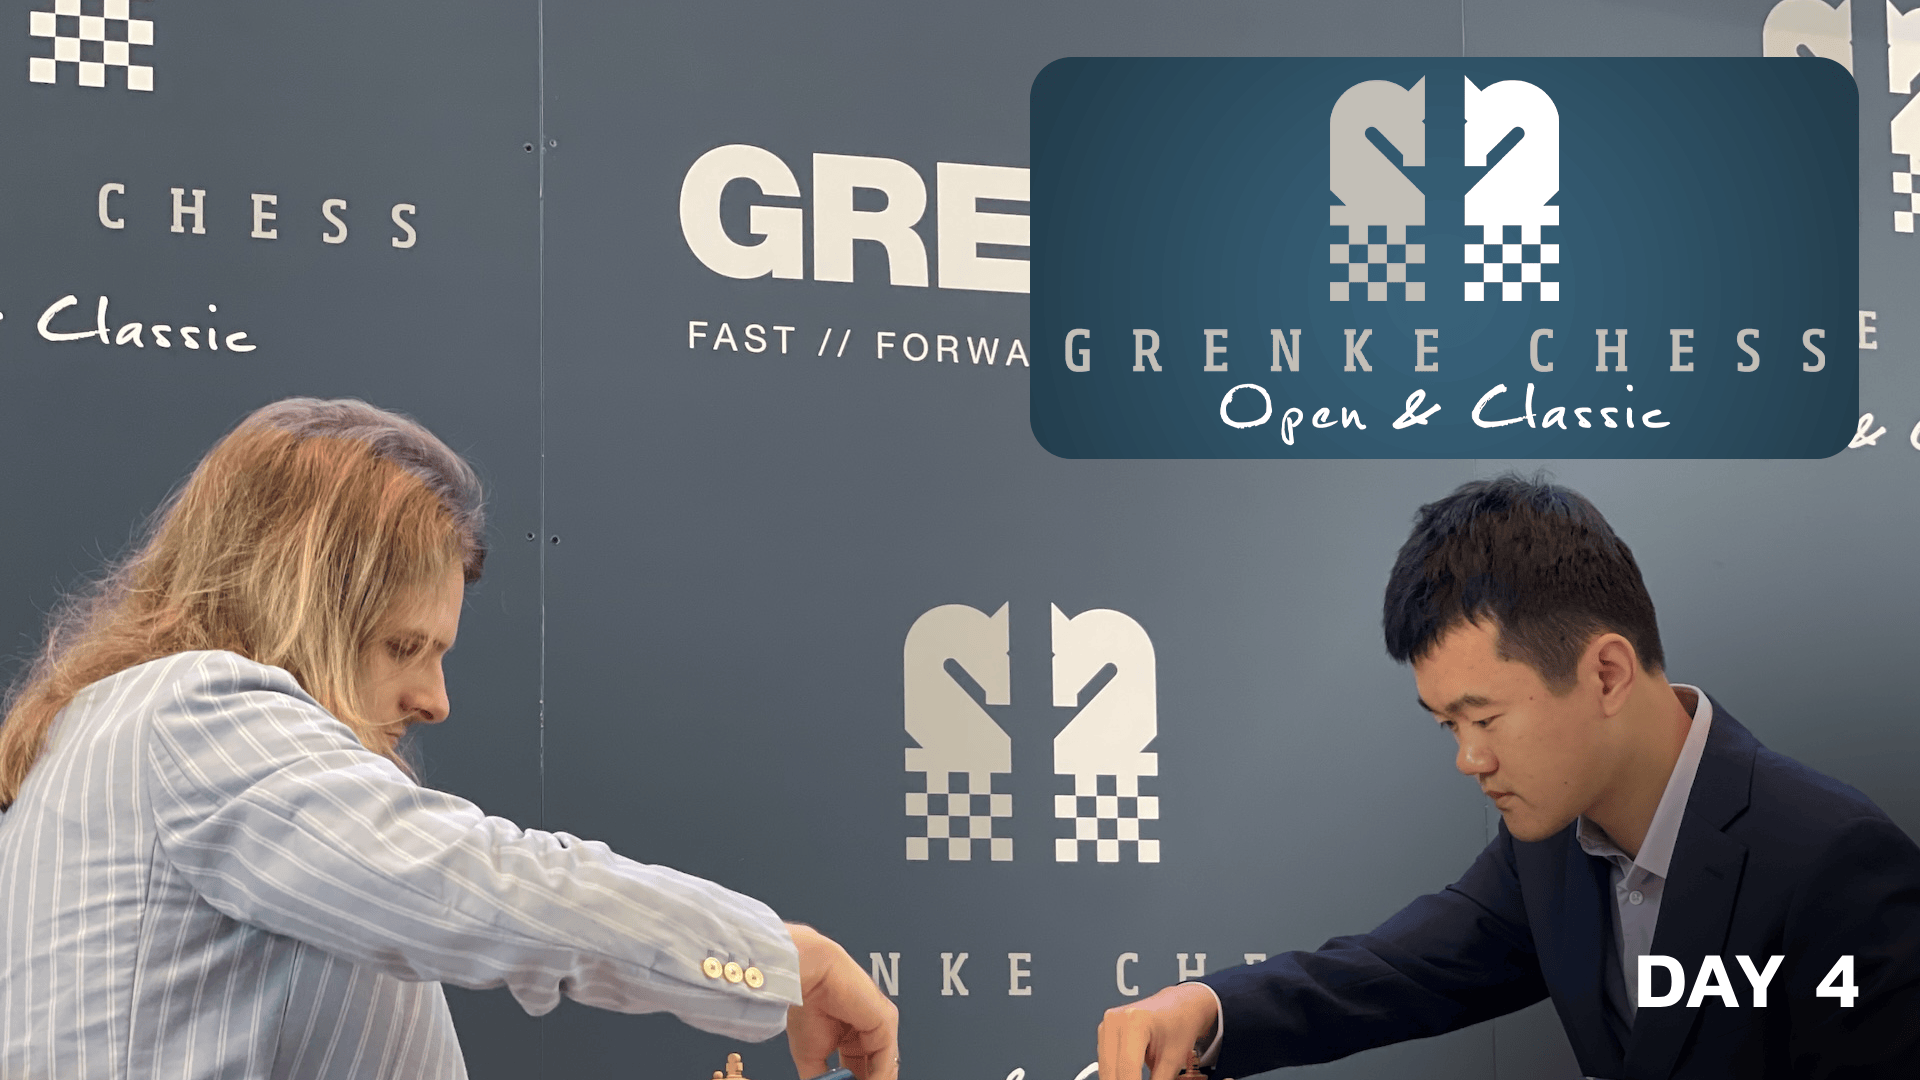 GRENKE 国际象棋第 4 天：Rapport 击败 Ding，Carlsen-Rapport 之战迫在眉睫